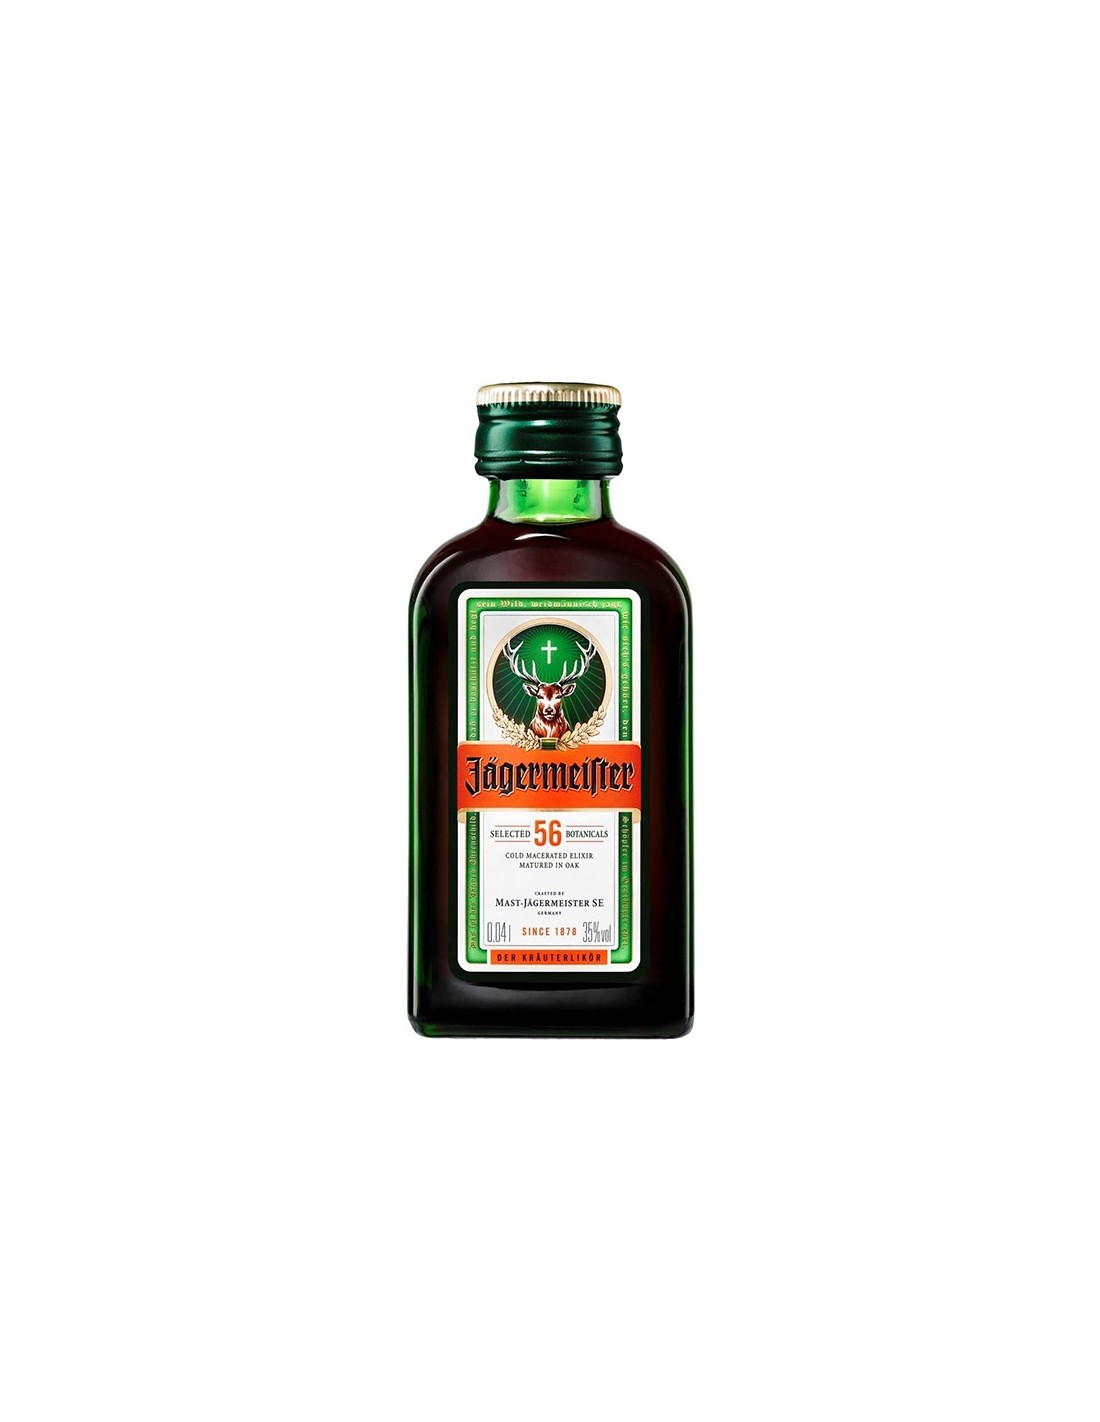 Lichior digestiv Jagermeister 35% alc., 0.04L, Germania alcooldiscount.ro